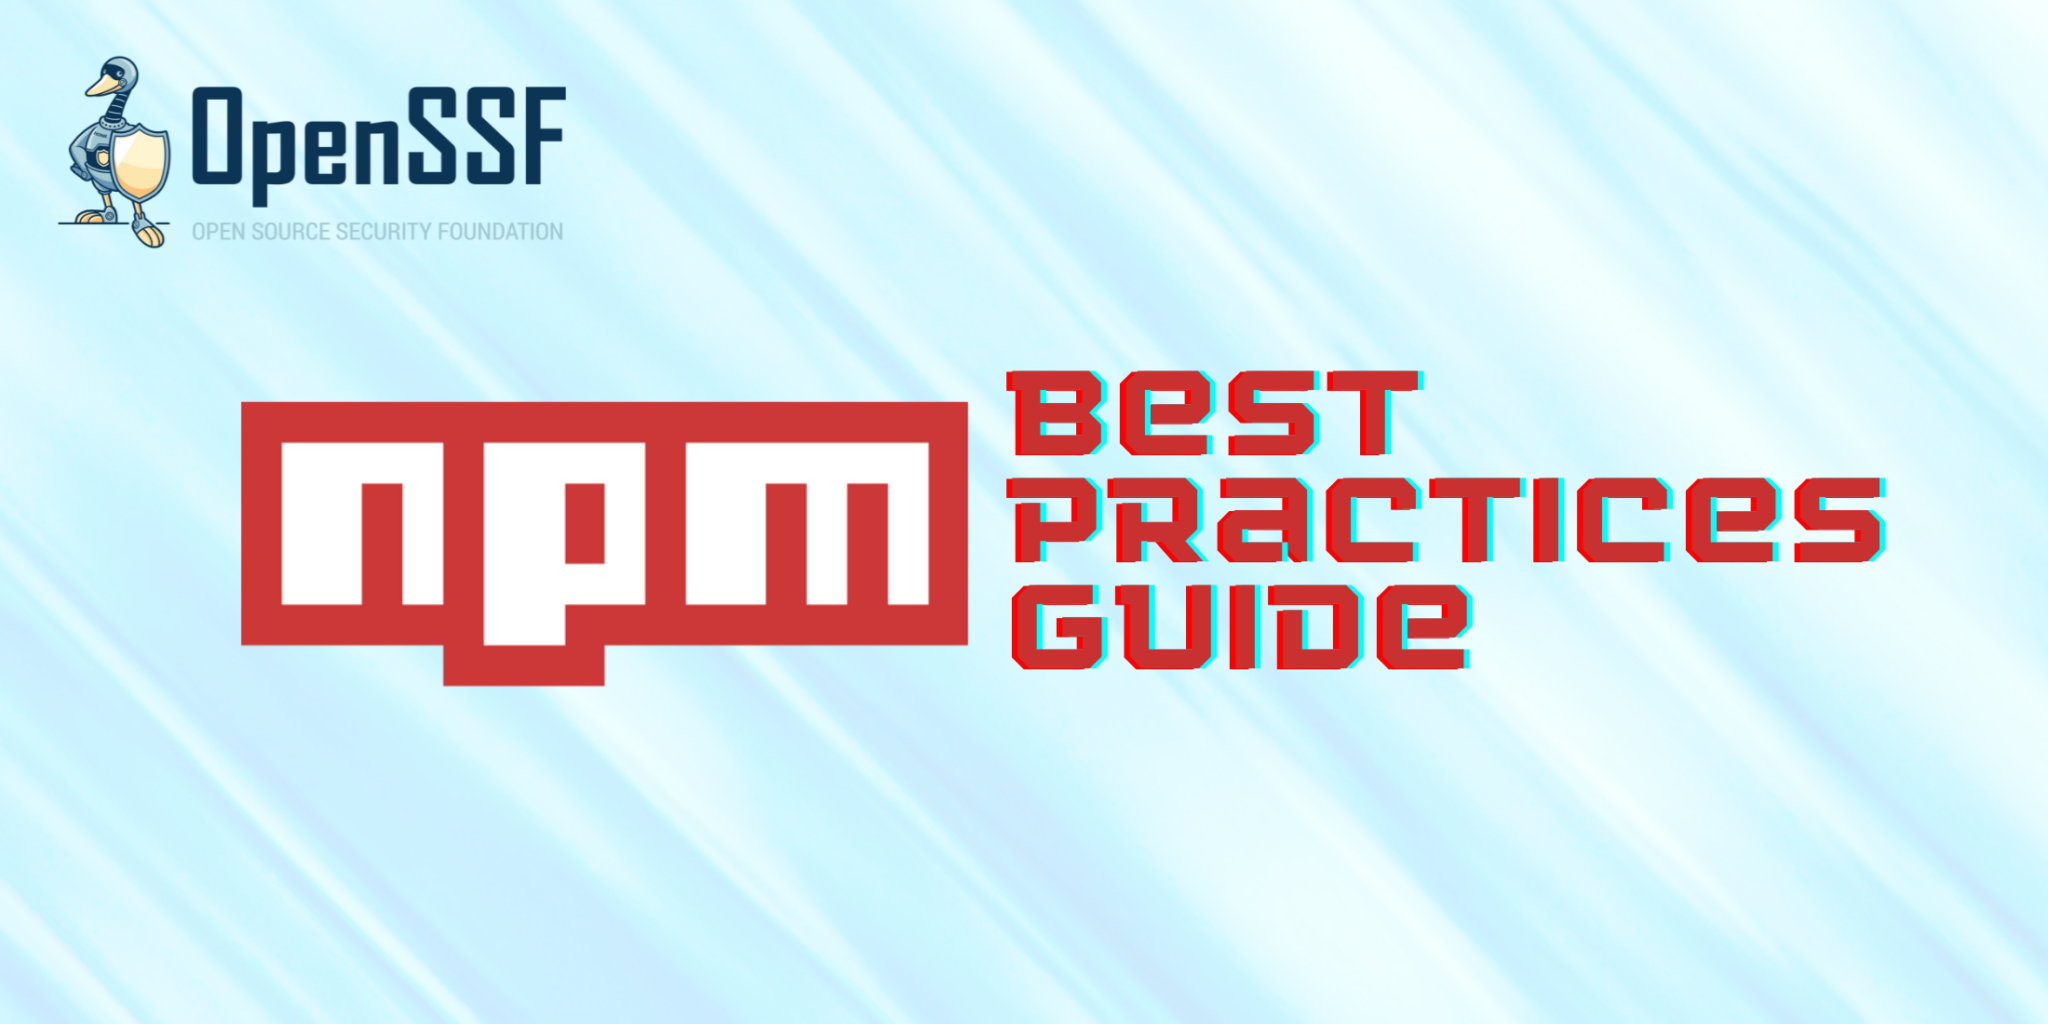 openssf npm best practices